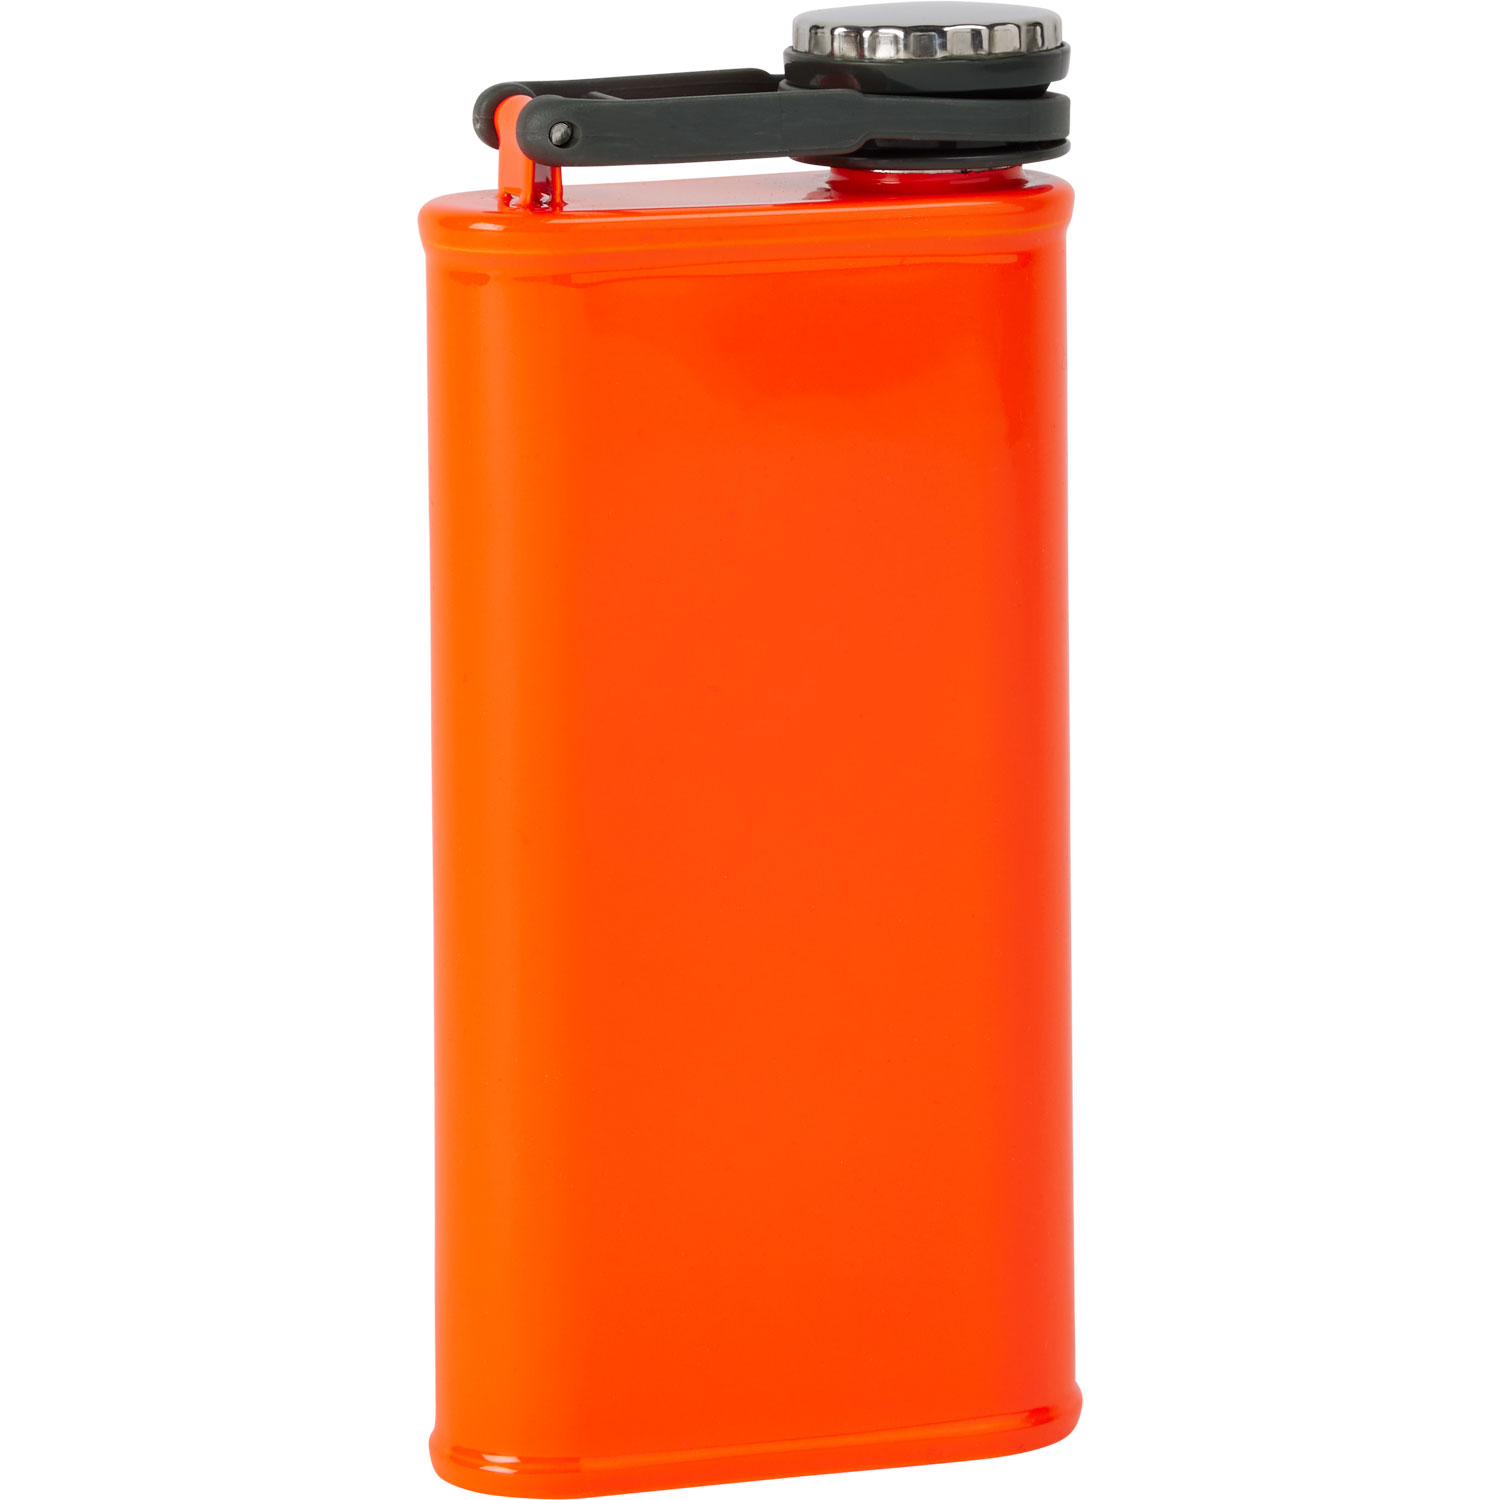 Stanley Classic Easy Fill Wide Mouth Flask | 8 oz (Blaze Orange)